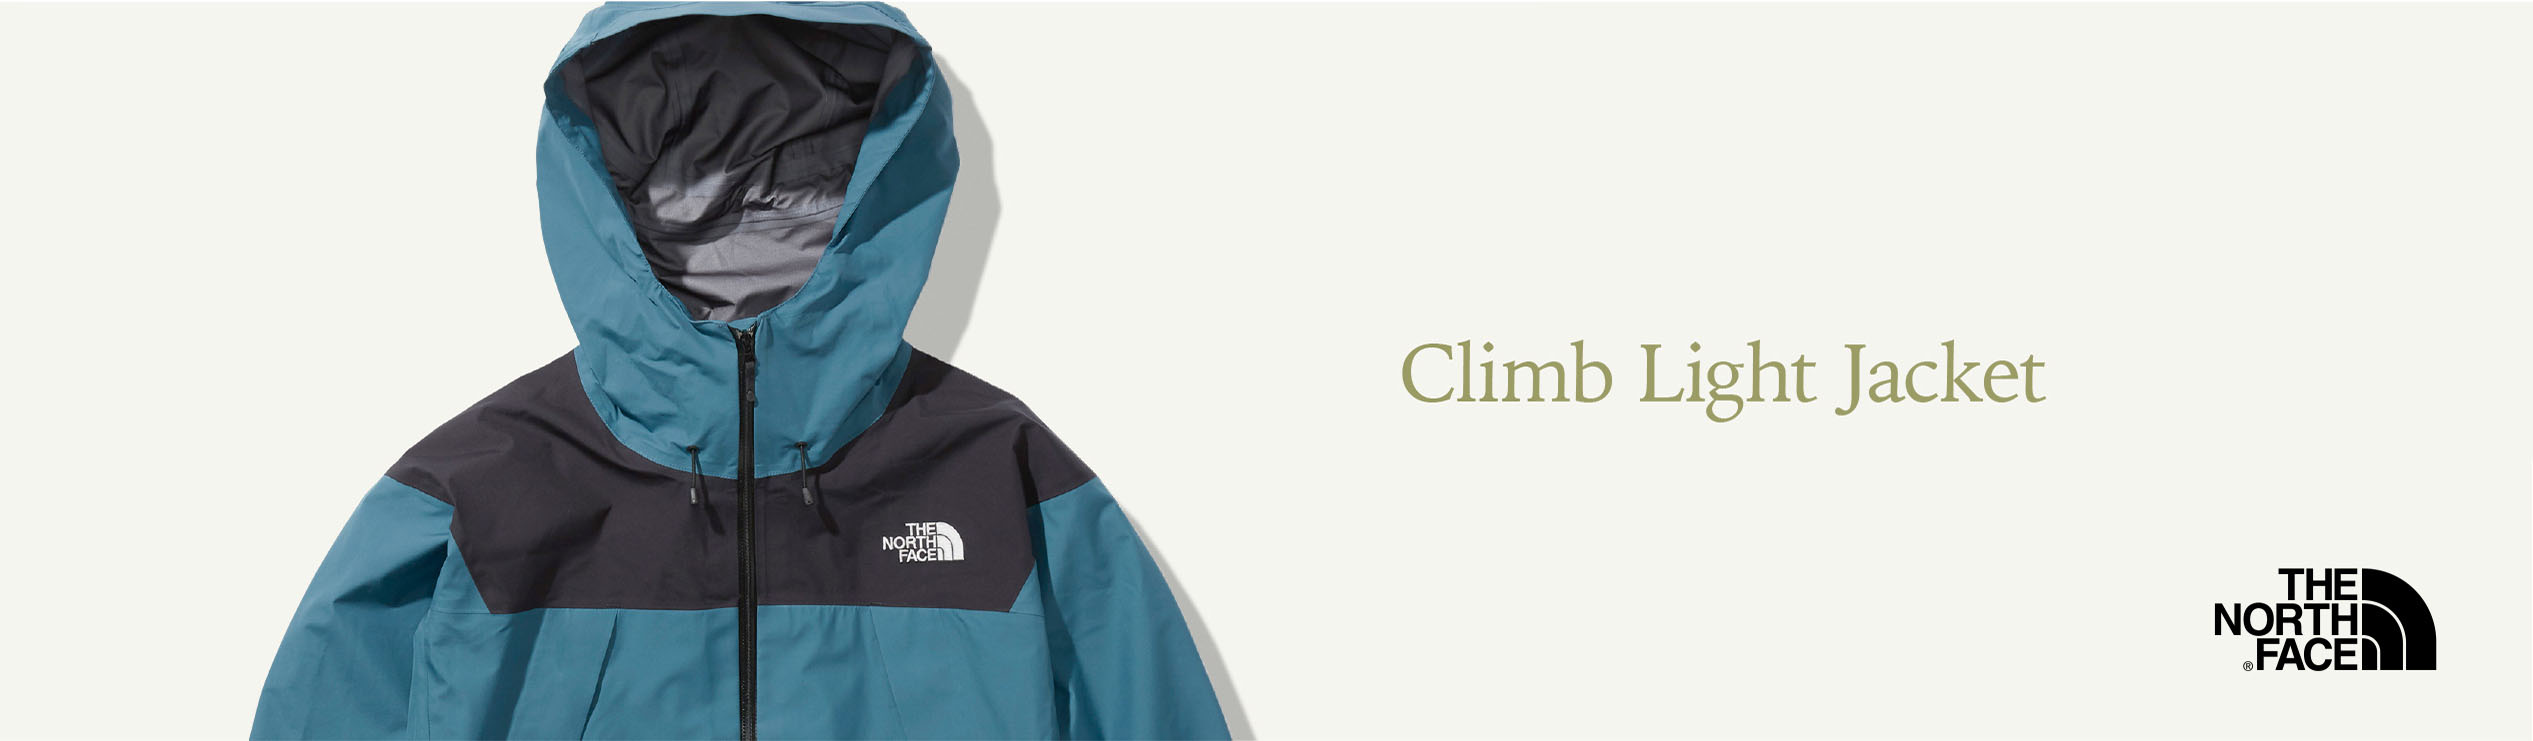 Climb Light Jacket